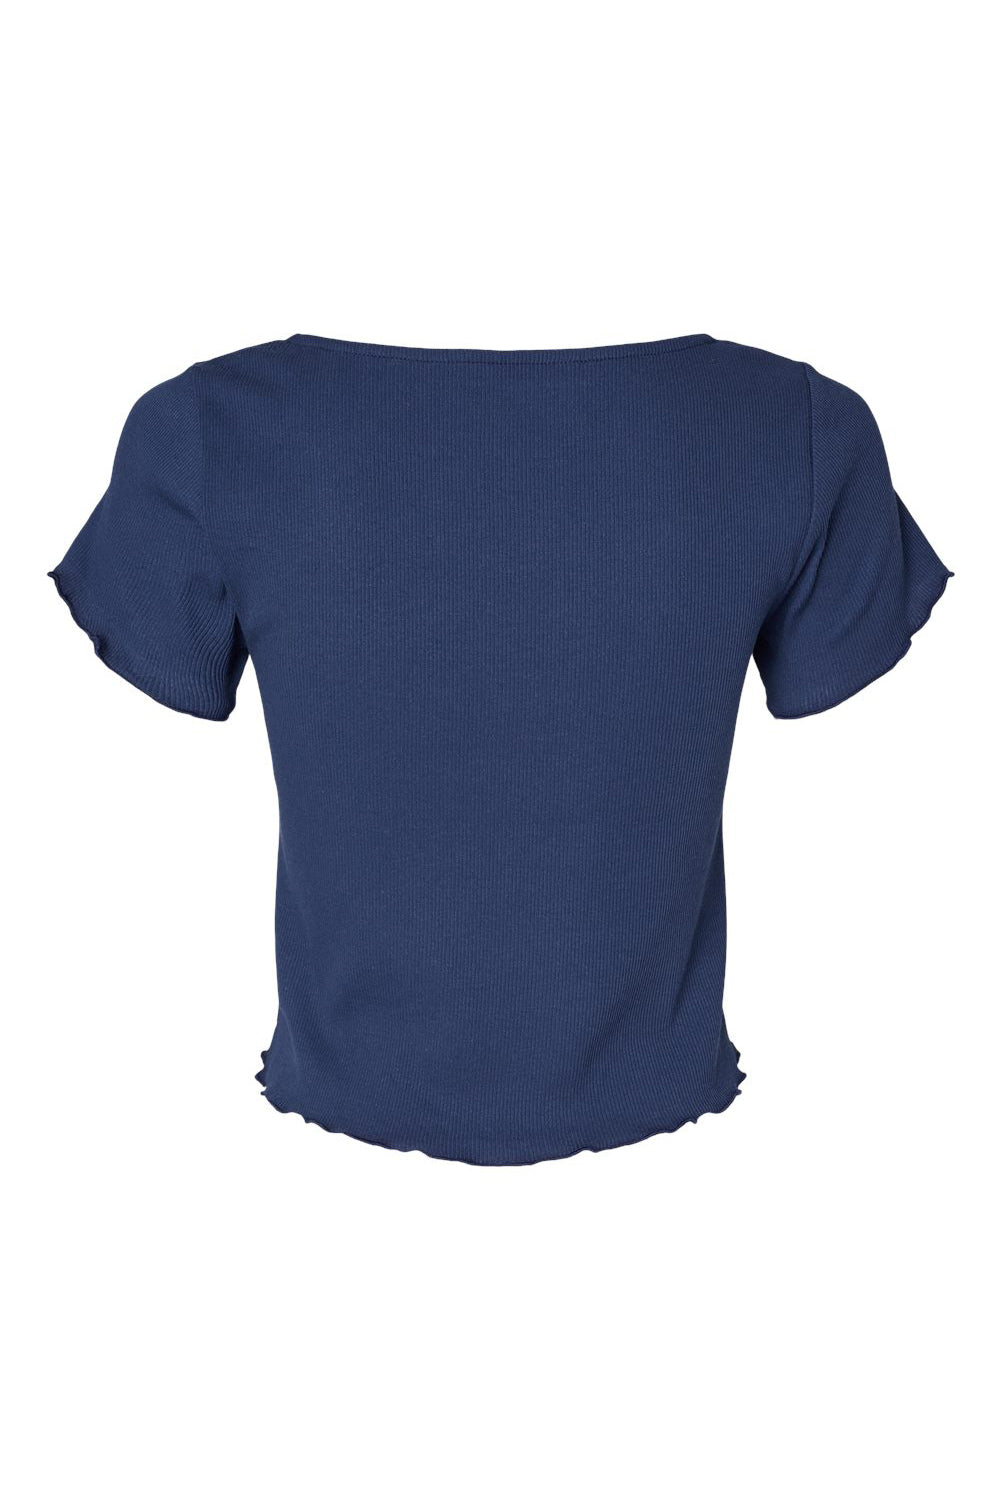 Boxercraft BW2403 Womens Baby Rib Short Sleeve Scoop Neck T-Shirt Navy Blue Flat Back